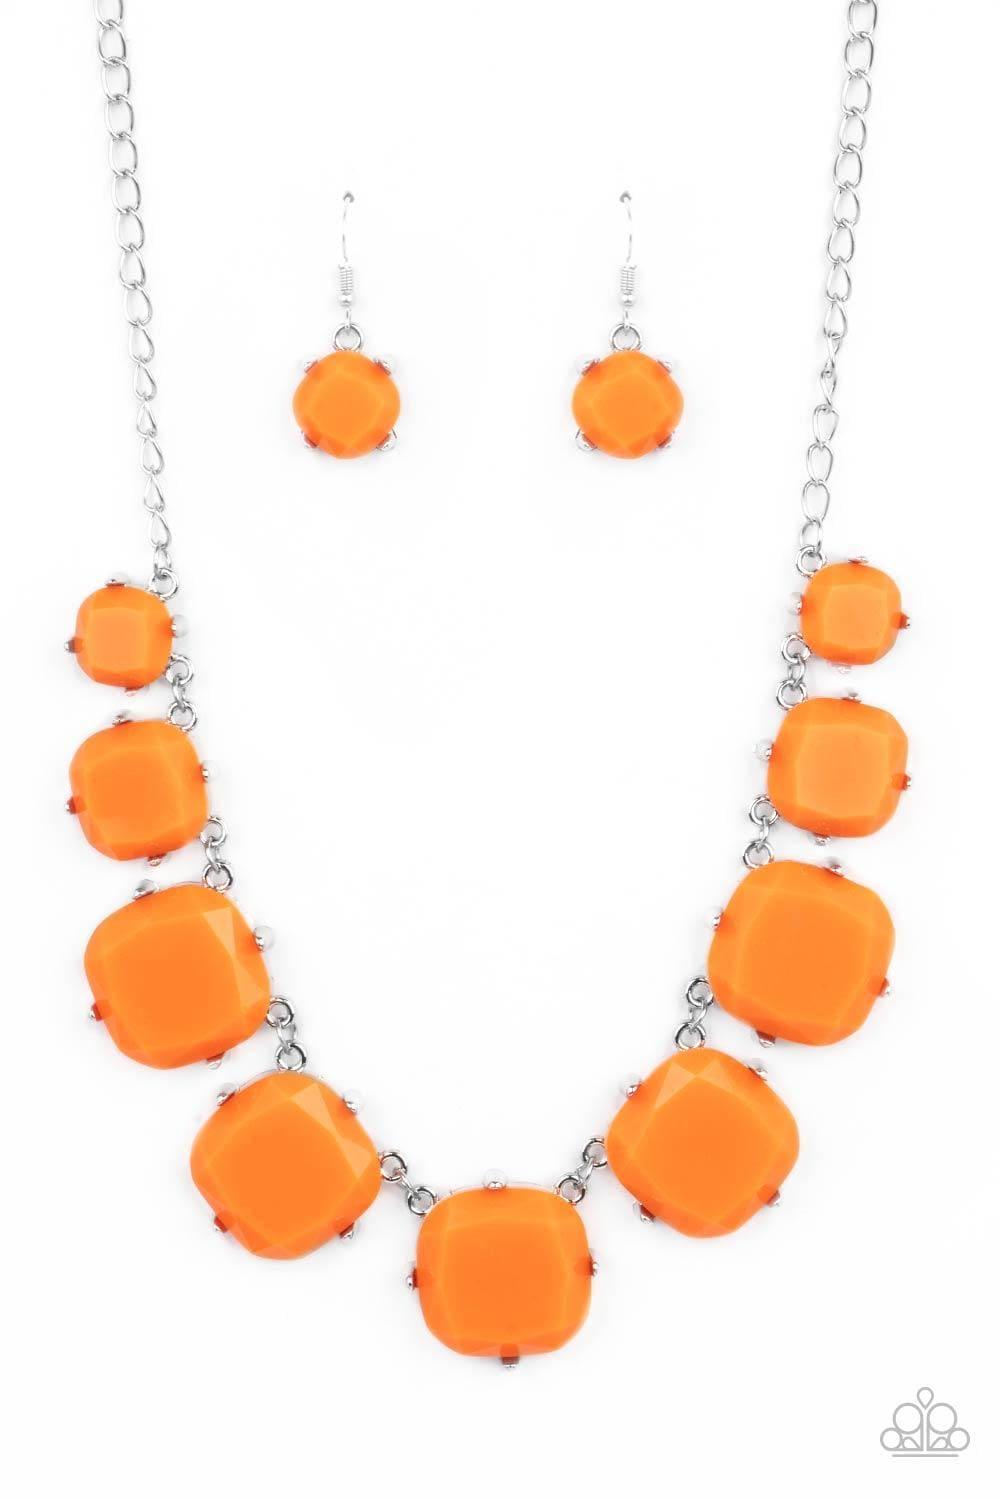 Paparazzi Accessories - Prismatic Prima Donna - Orange Necklace - Bling by JessieK